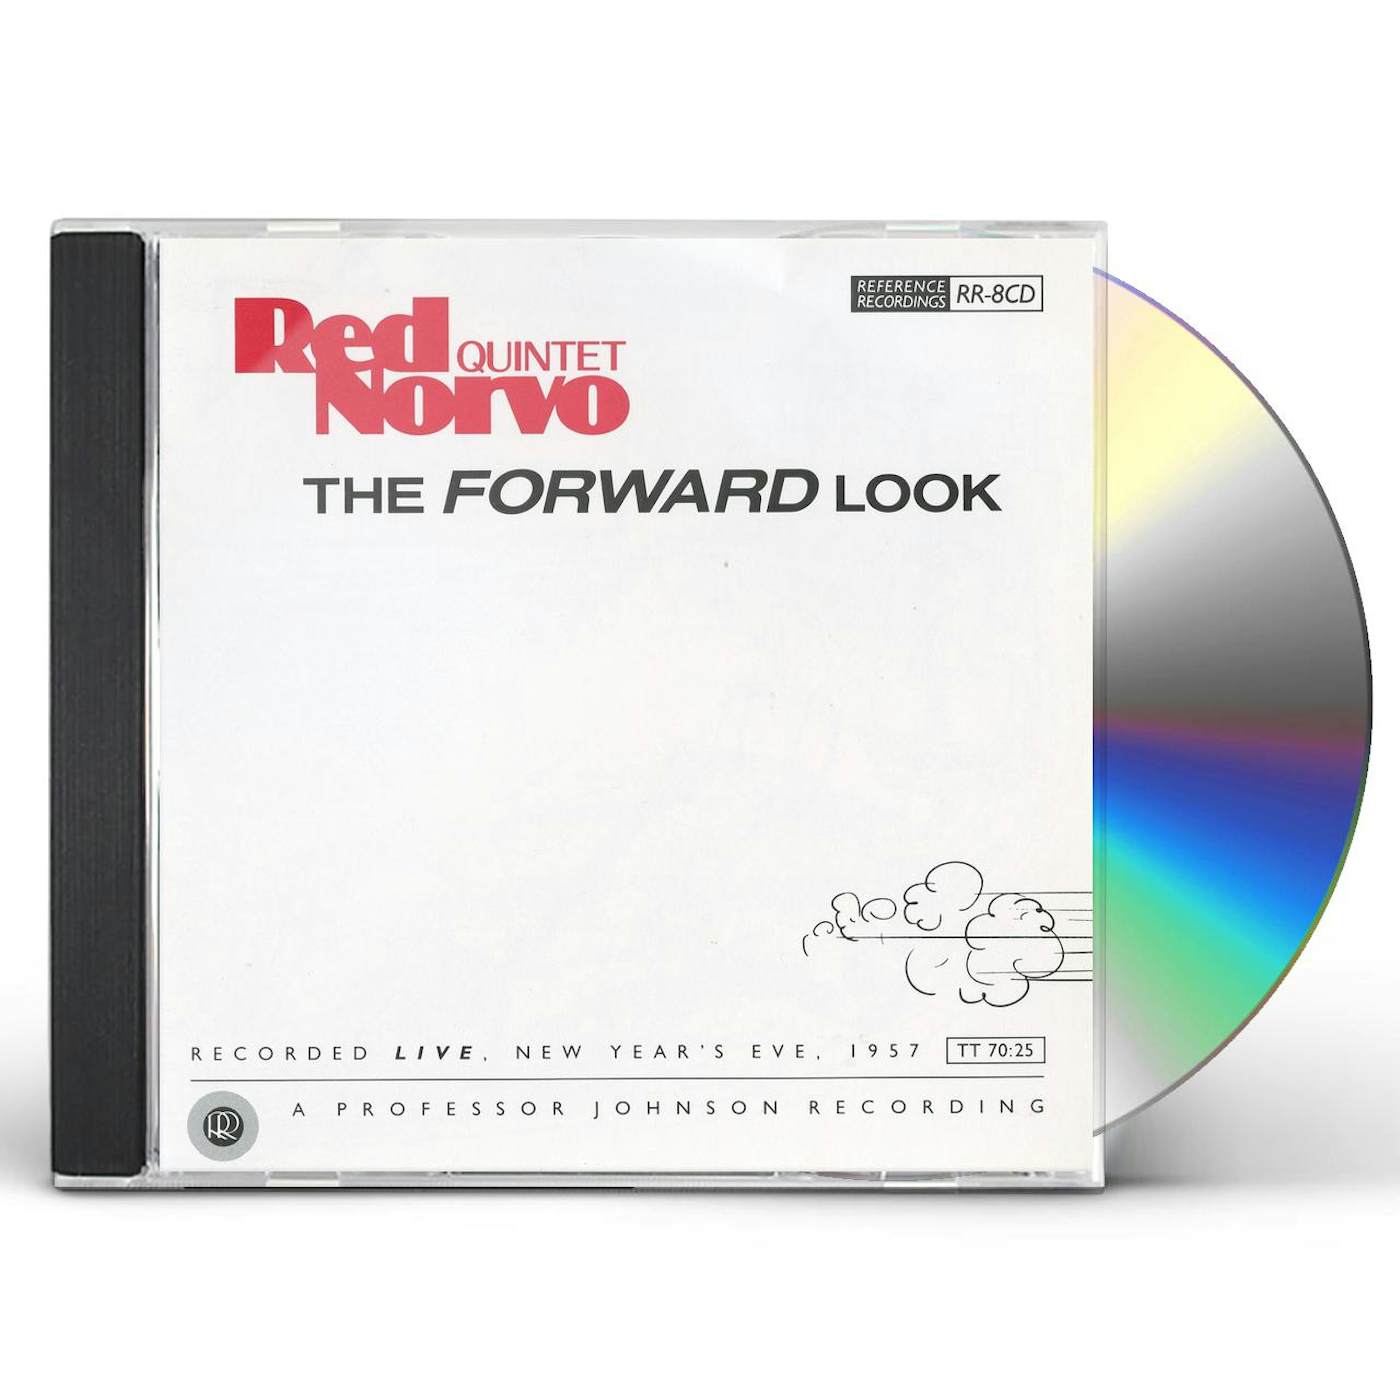 Red Norvo FORWARD LOOK CD